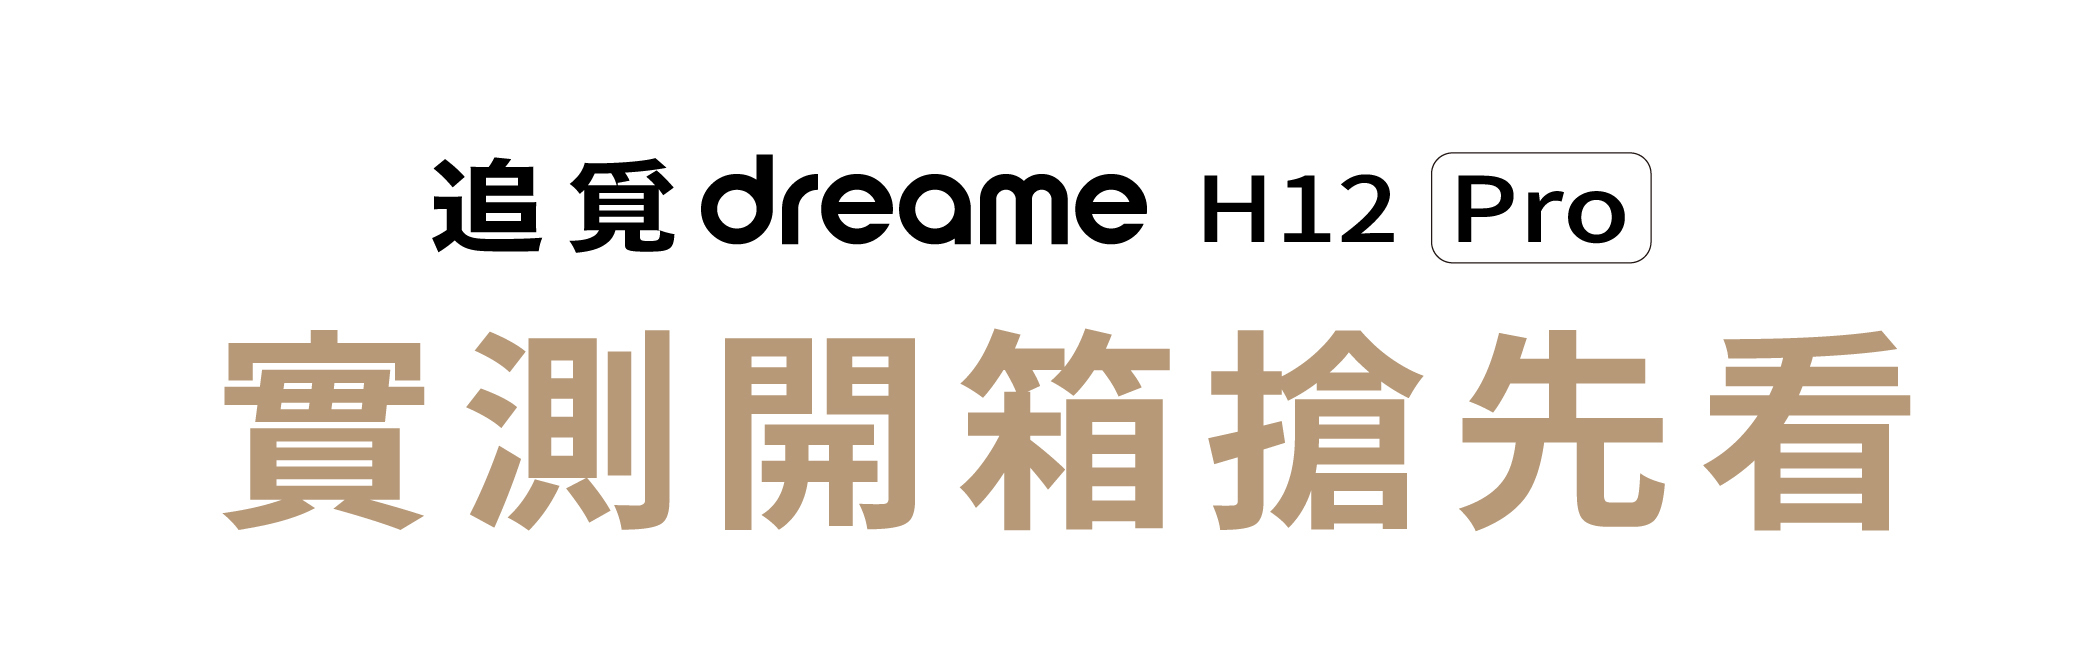 dreame H12 Pro實測開箱搶先看